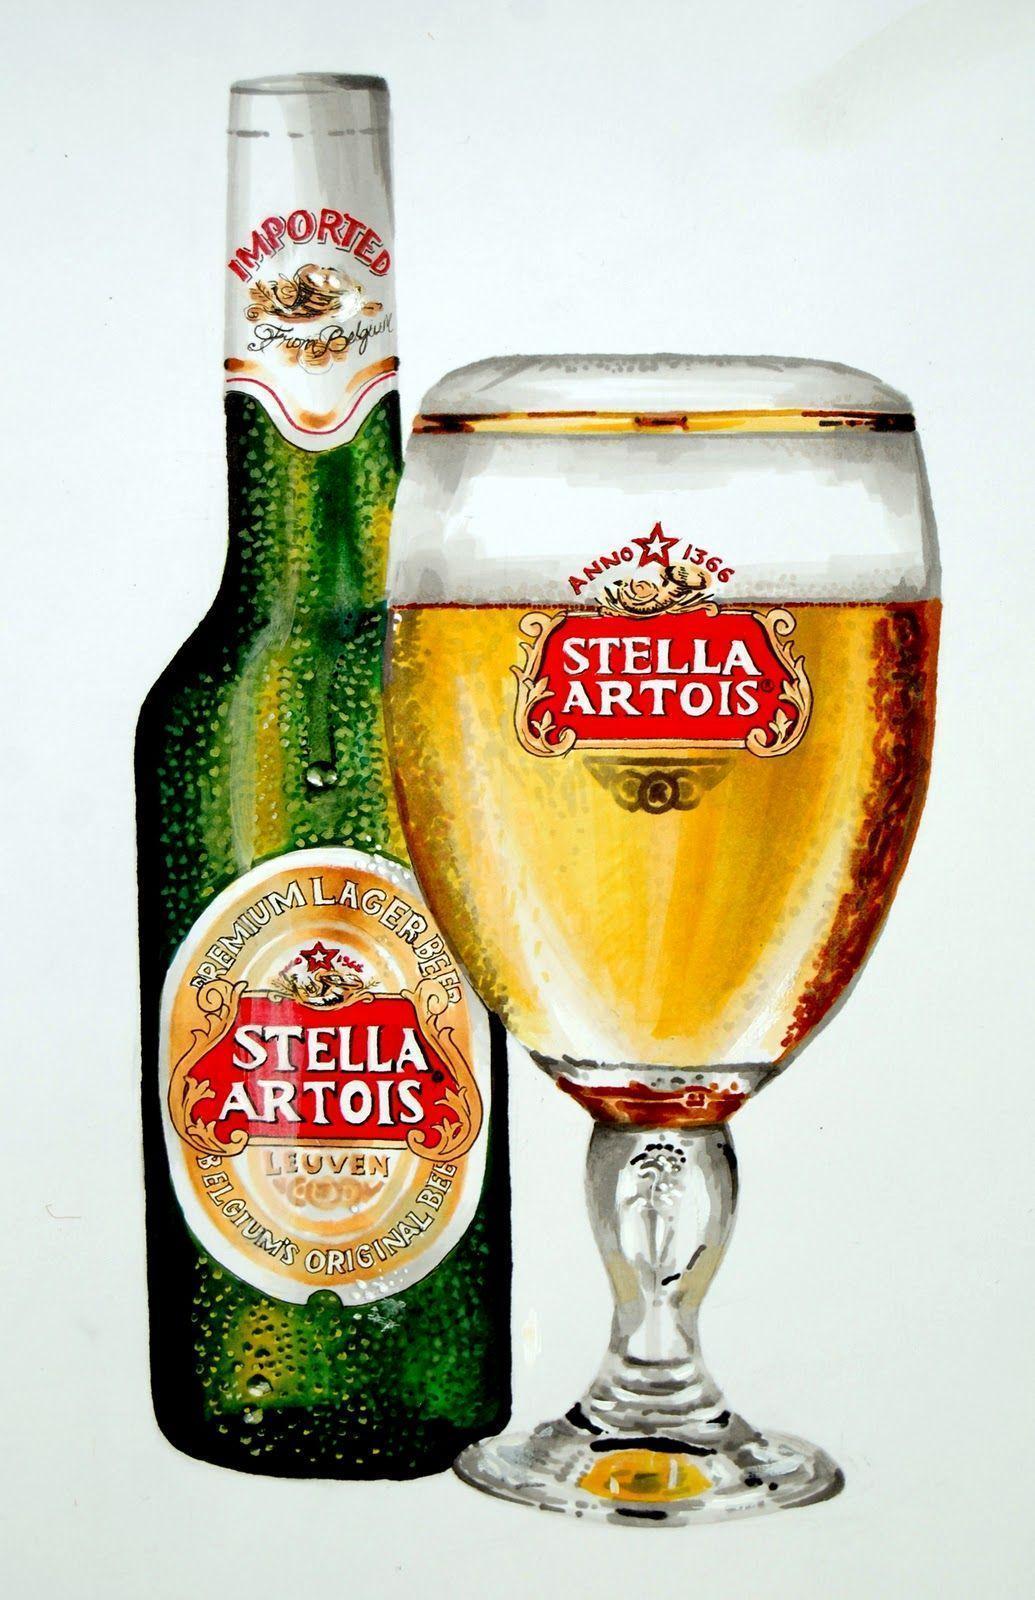 HD Stella Artois Wallpaper and Photo. HD Food Wallpaper